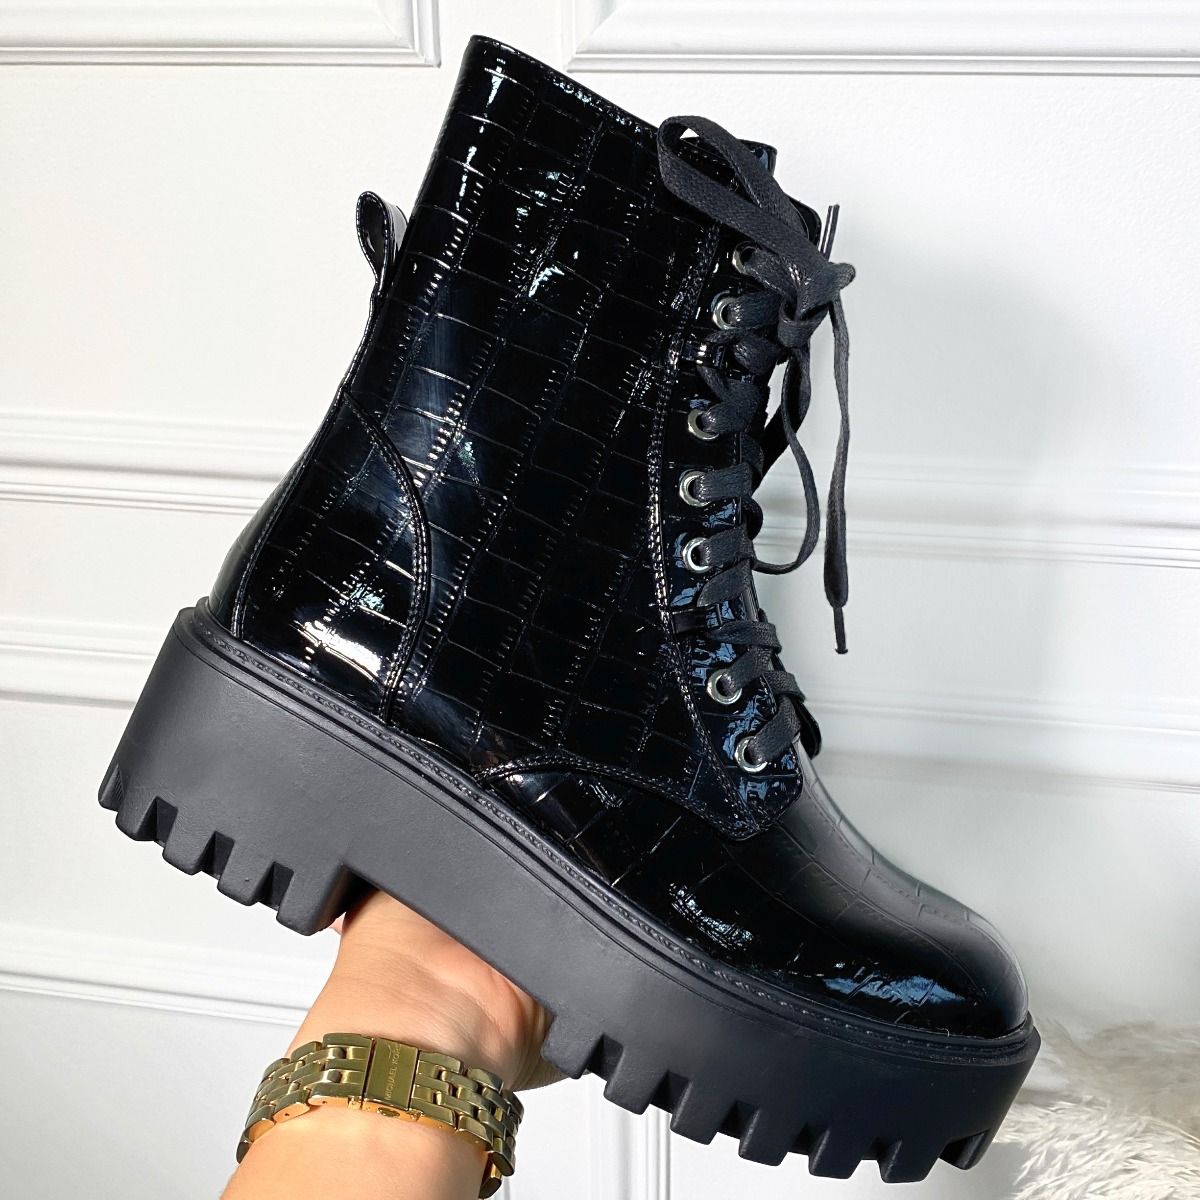 croc print boots black